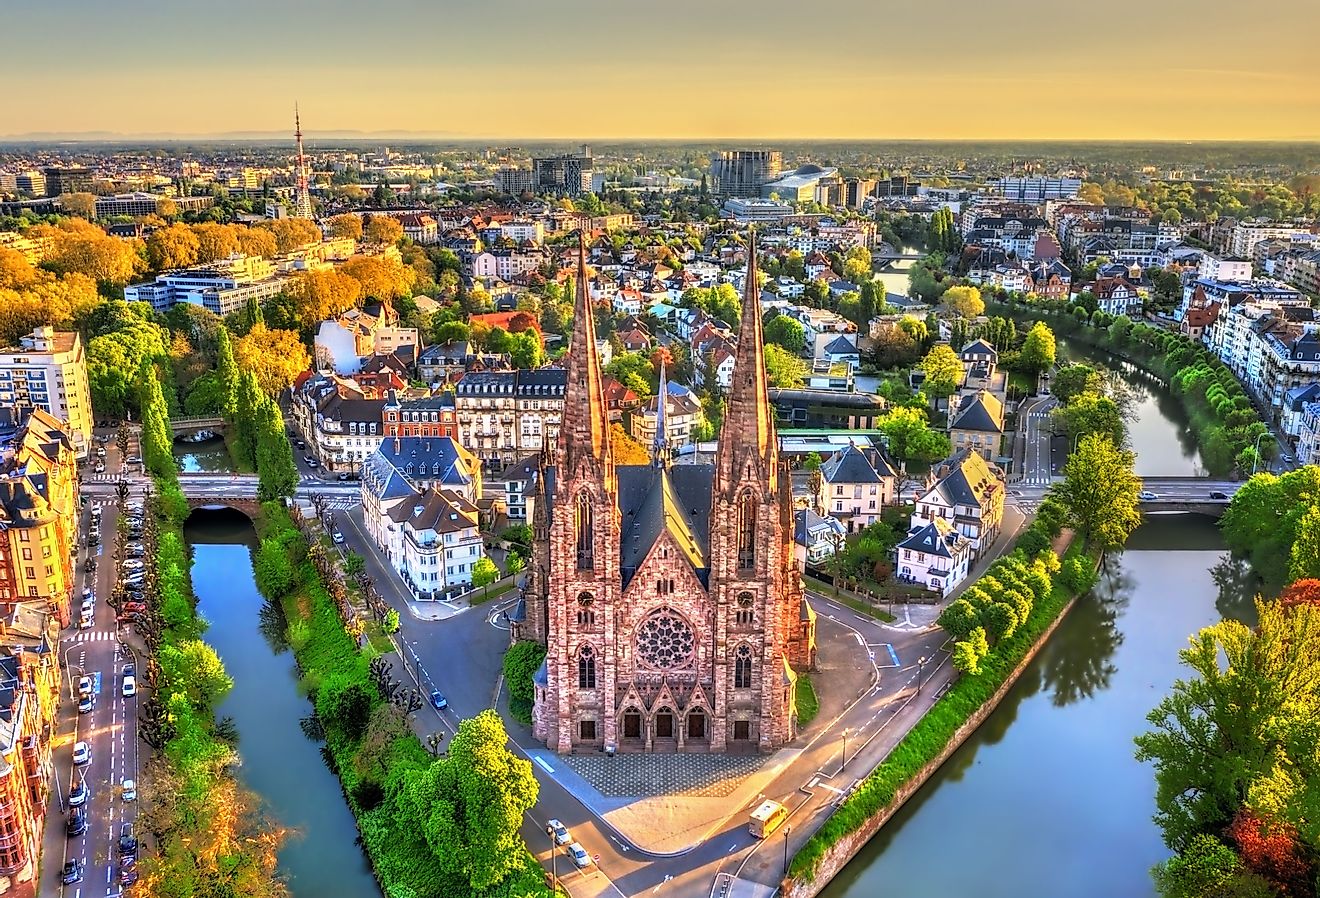 Saint Paul Church in Strasbourg, France.